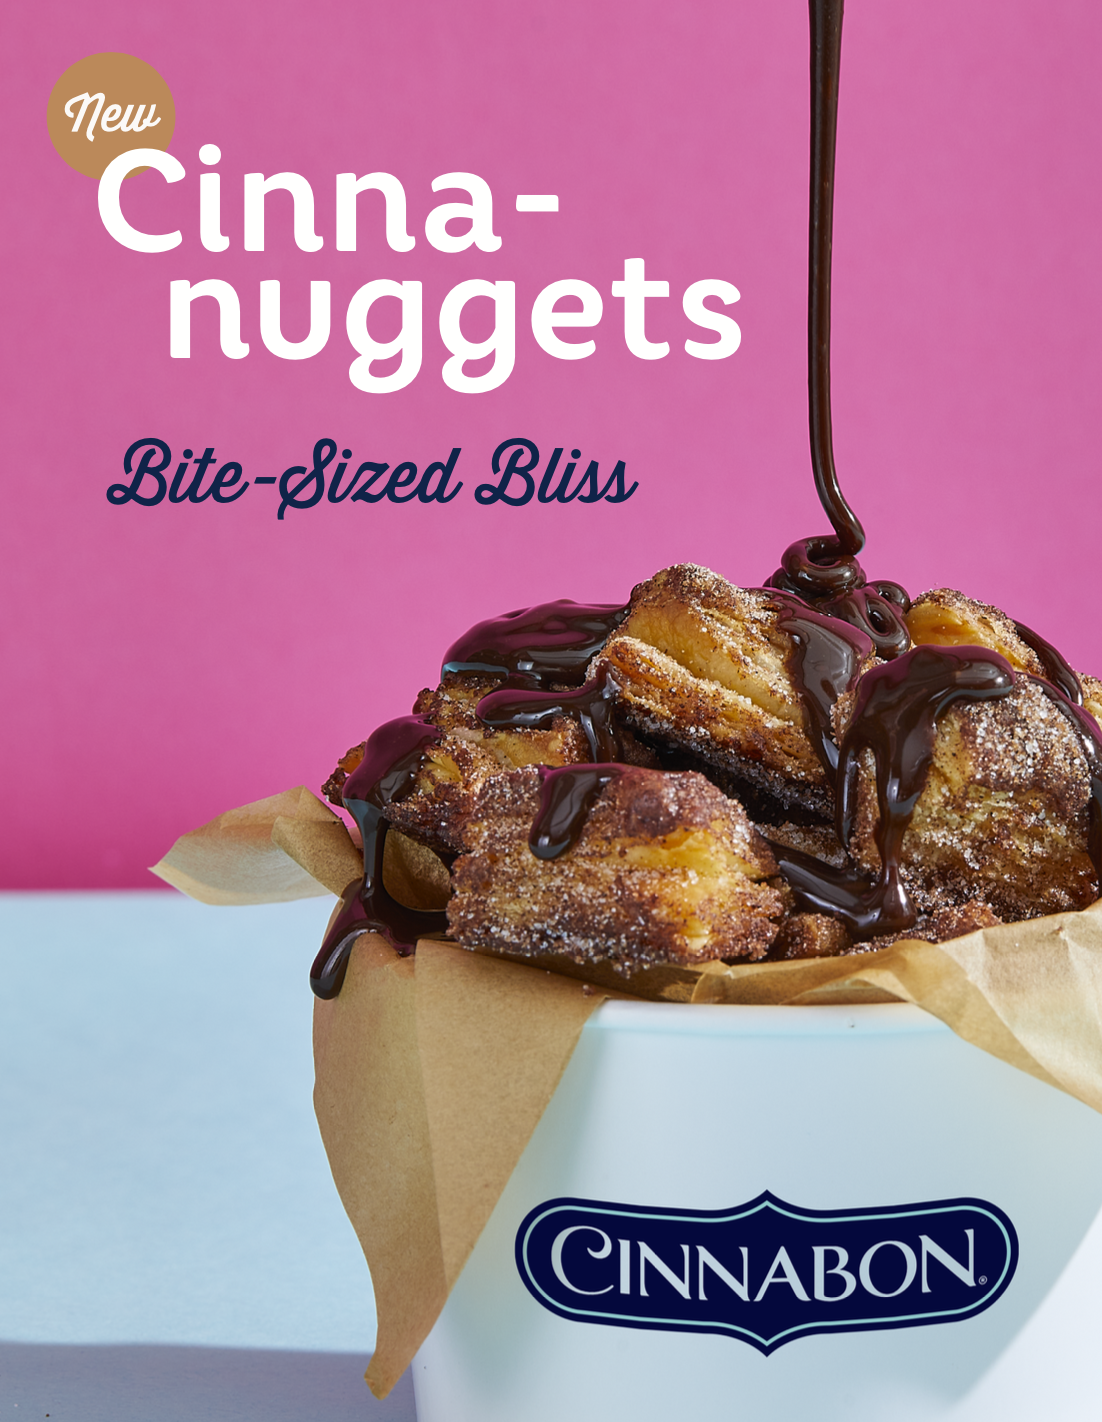 Cinnabon Cinnanuggets international food photography ad campaign